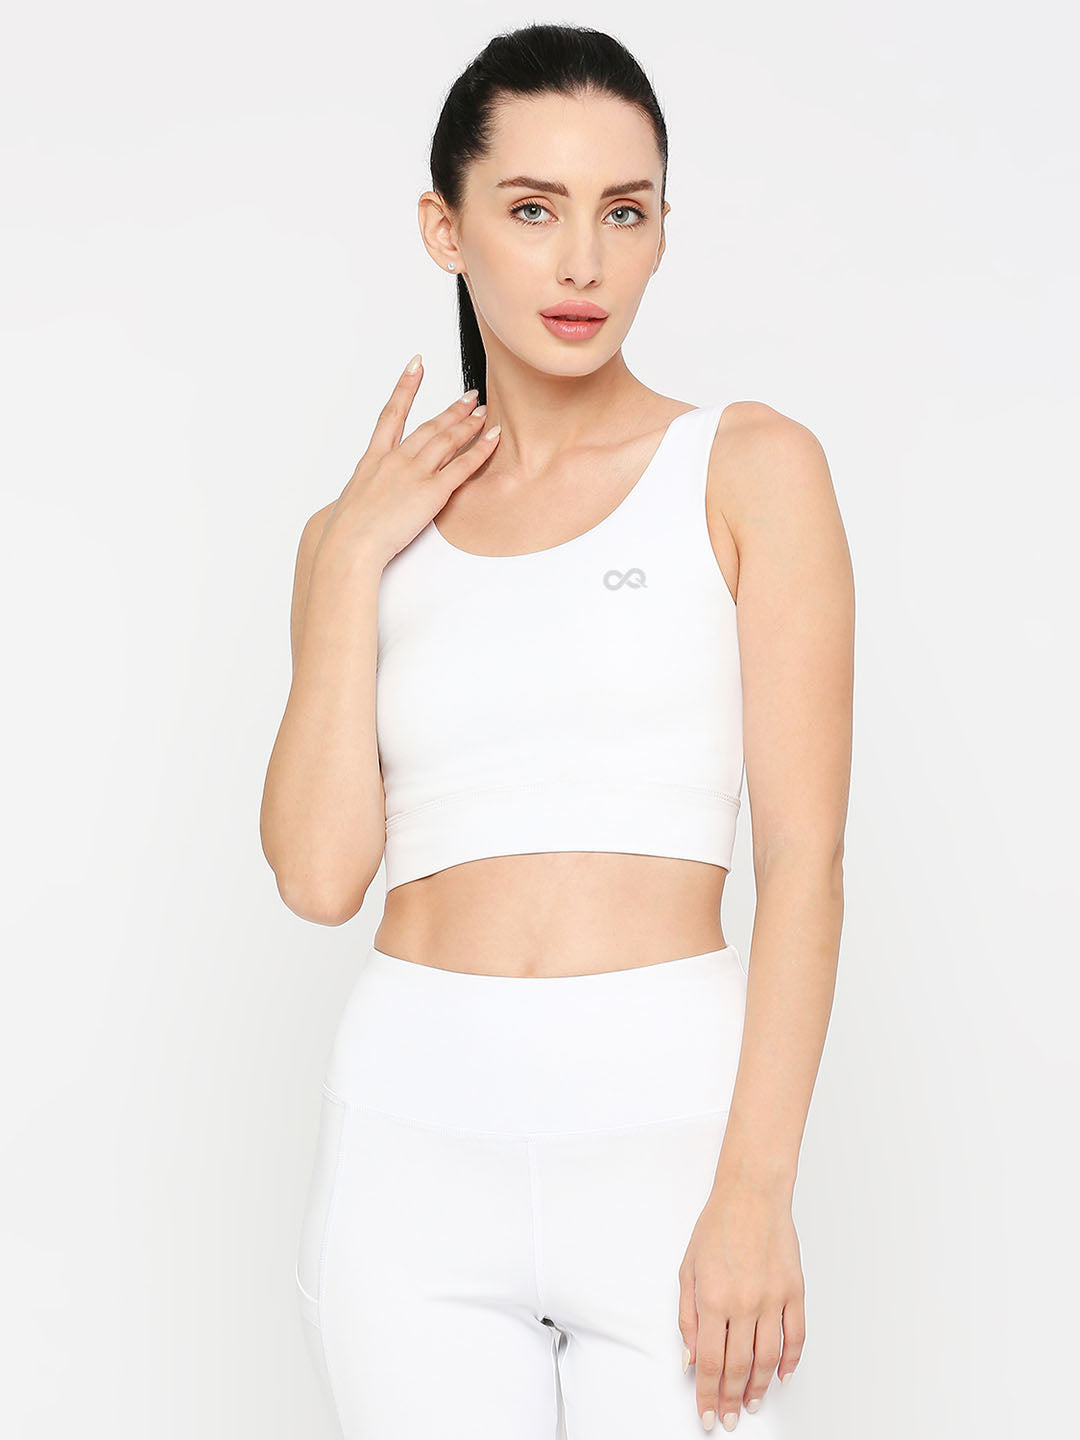 Black and Friday Deals 50% Off Clear! asdoklhq Sports Bras for Women,Vest  Yoga Wireless Underwear Sports Bras